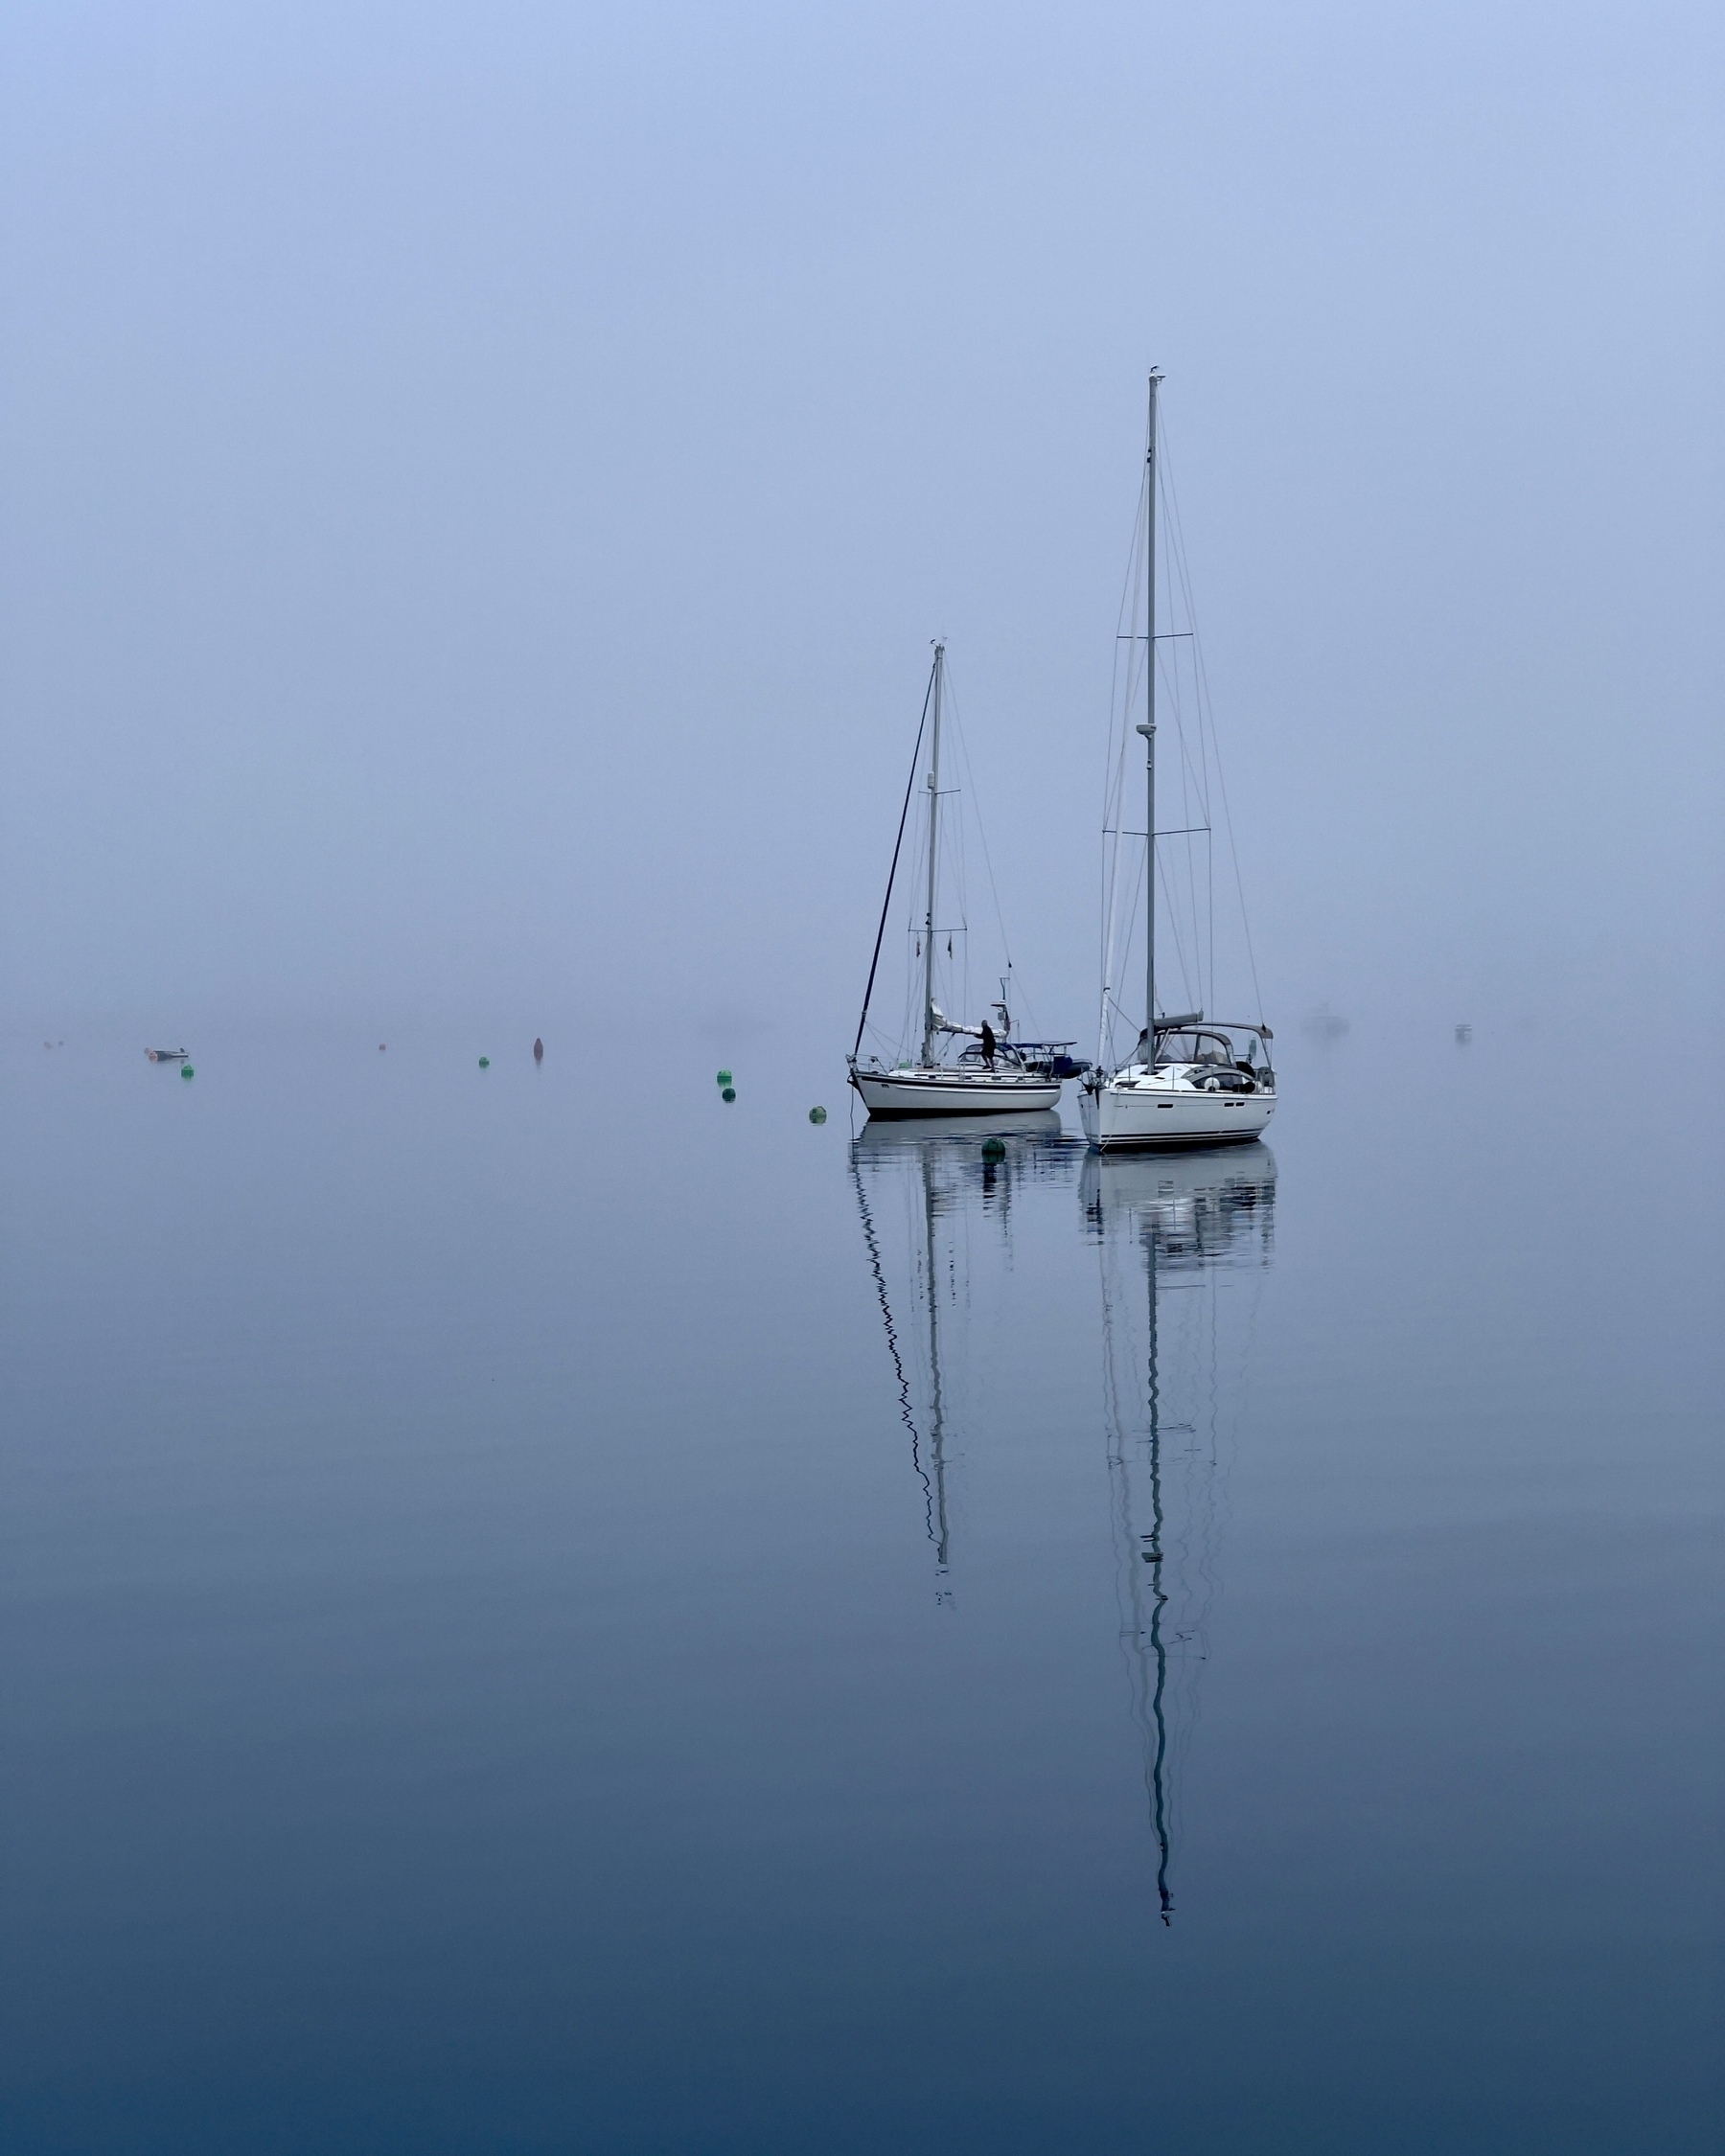 Boats on a foggy morning.